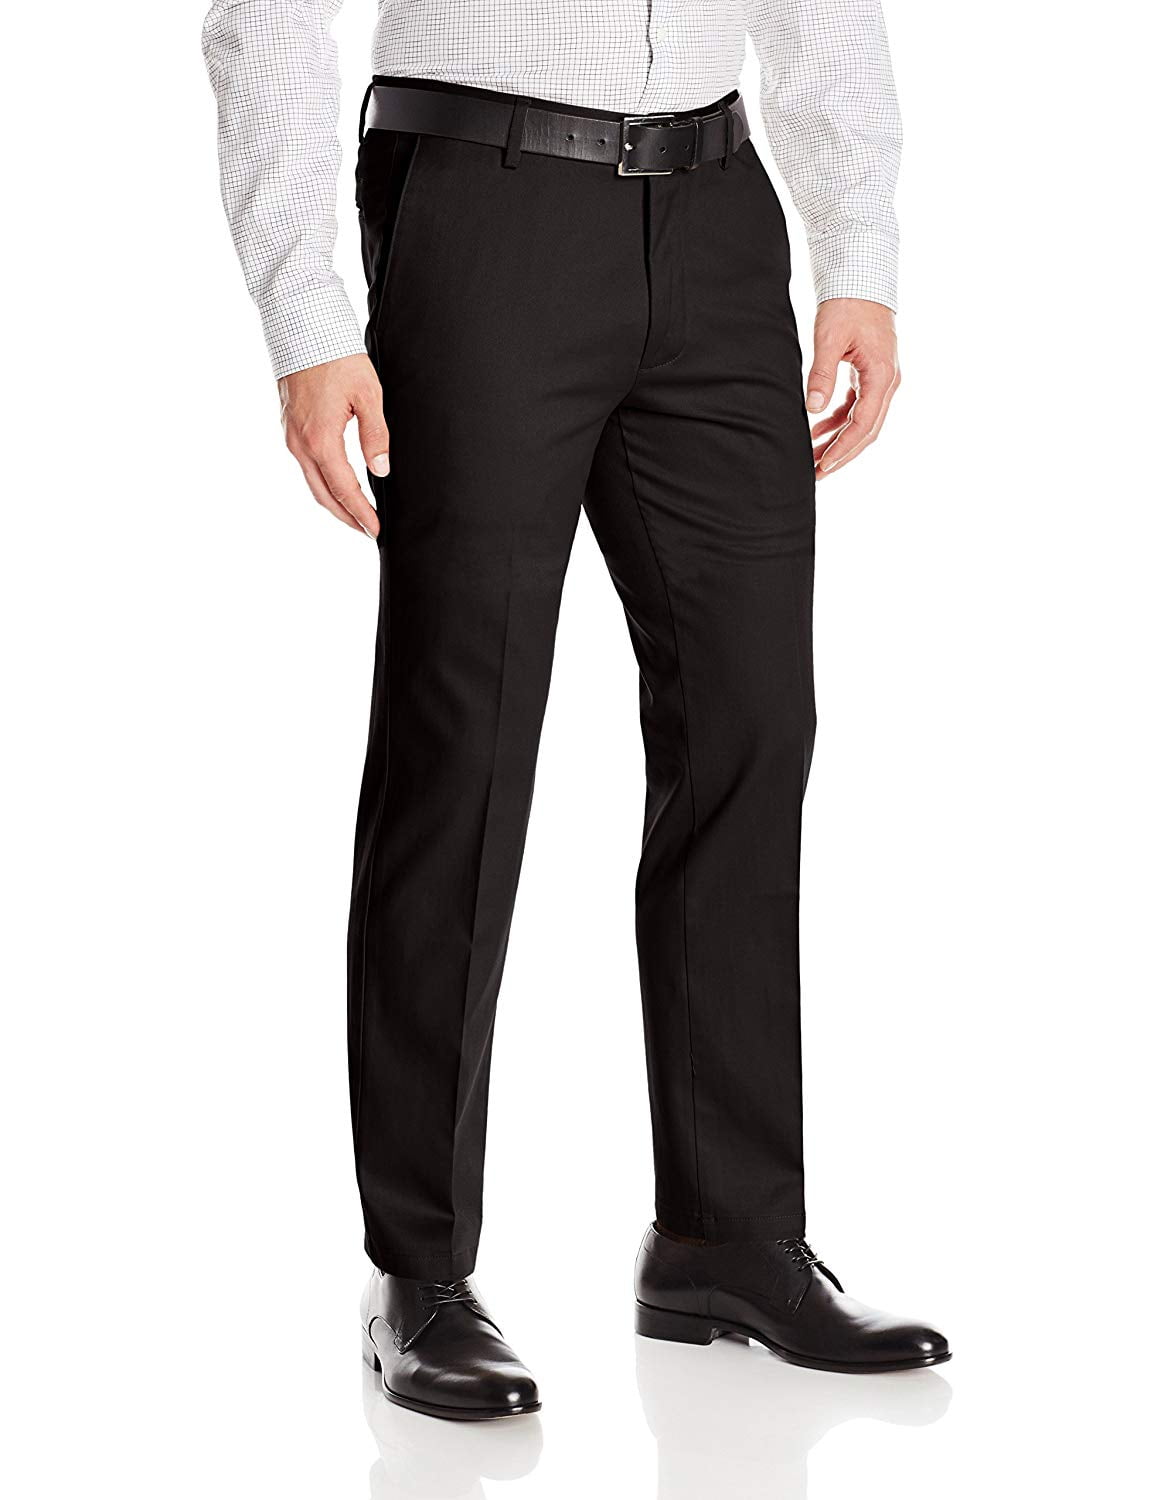 Formal Trouser: Browse Men Black Cotton Formal Trouser on Cliths-baongoctrading.com.vn